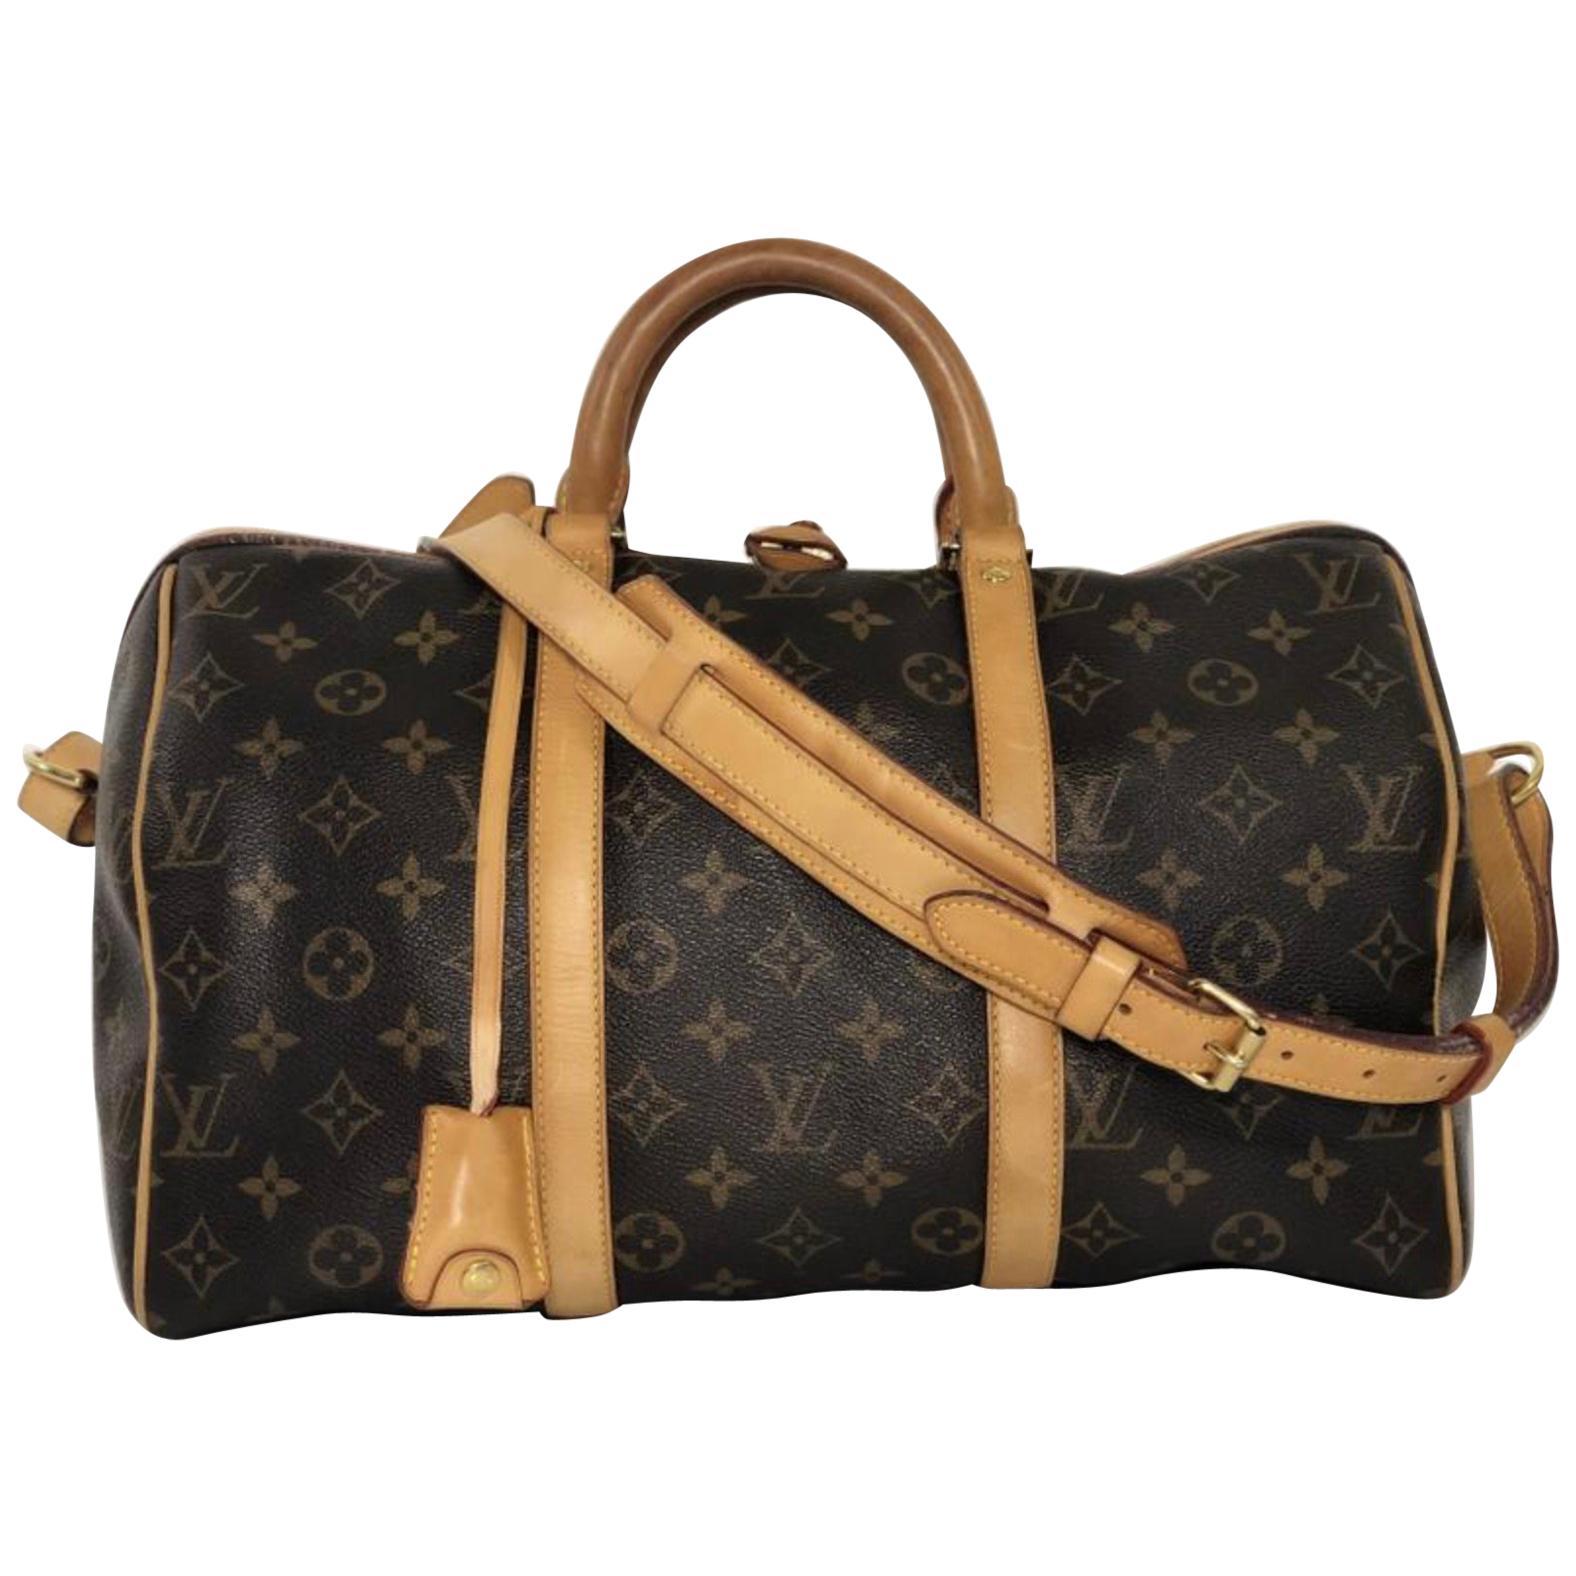 Louis Vuitton - Authenticated Sofia Coppola Handbag - Leather Burgundy Plain For Woman, Very Good Condition